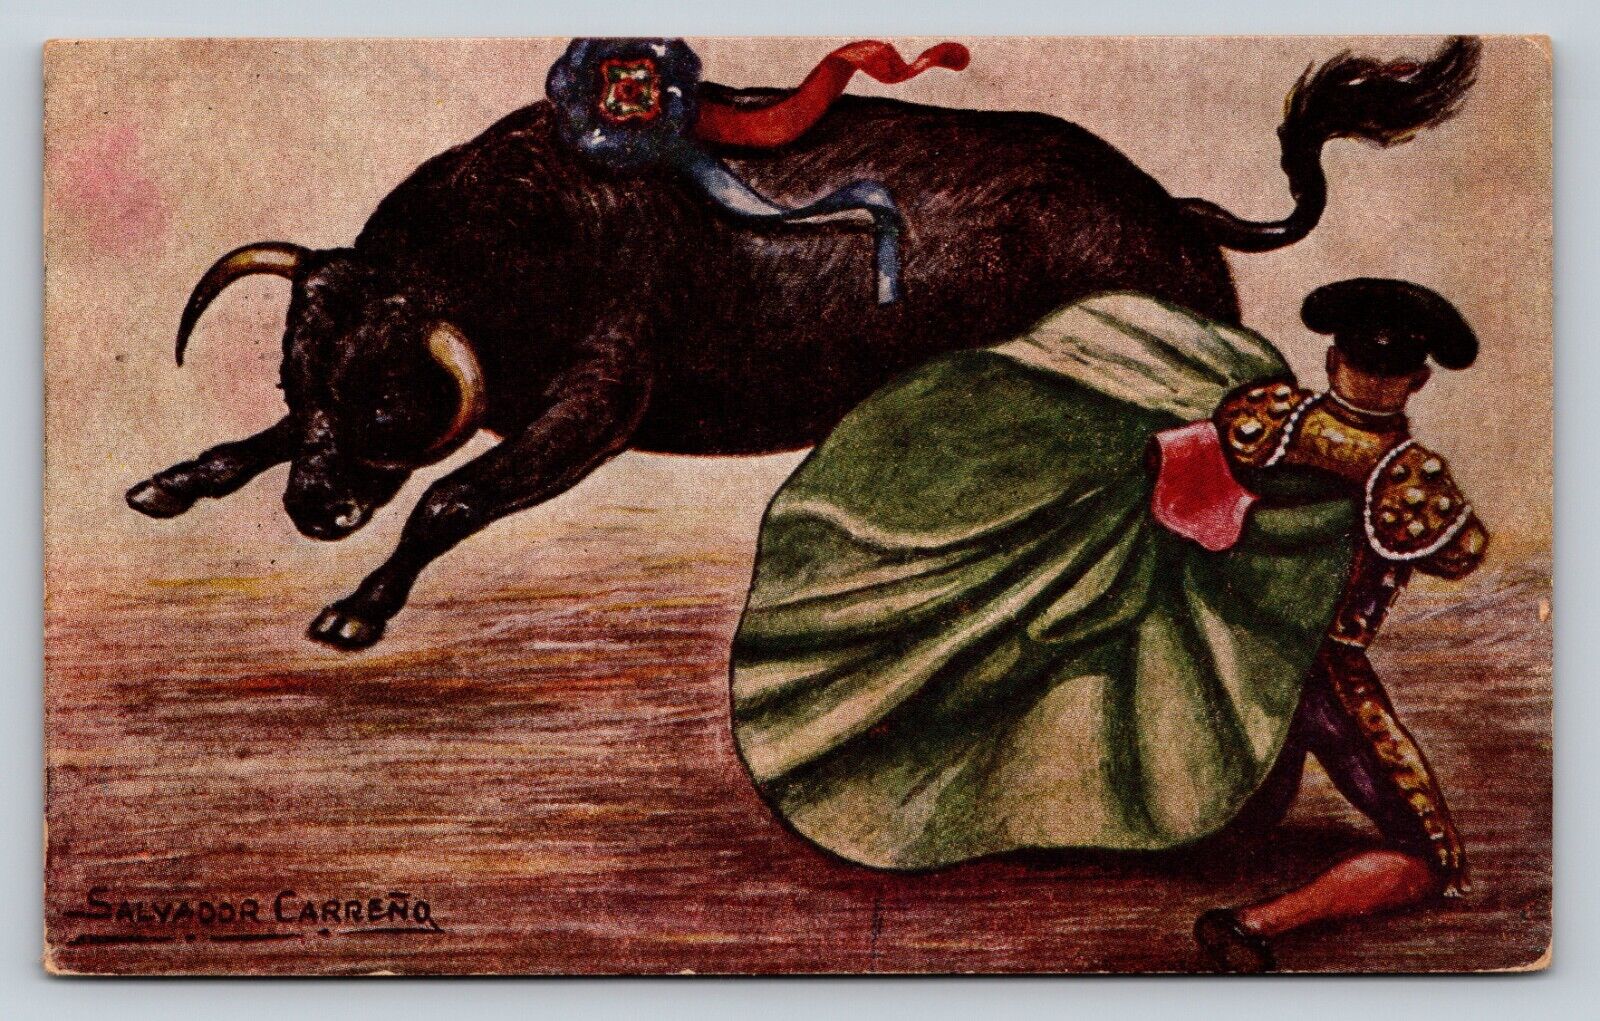 c1950s Salvador Carreña, Bull Fighting Matador Illustration VINTAGE Postcard 3c